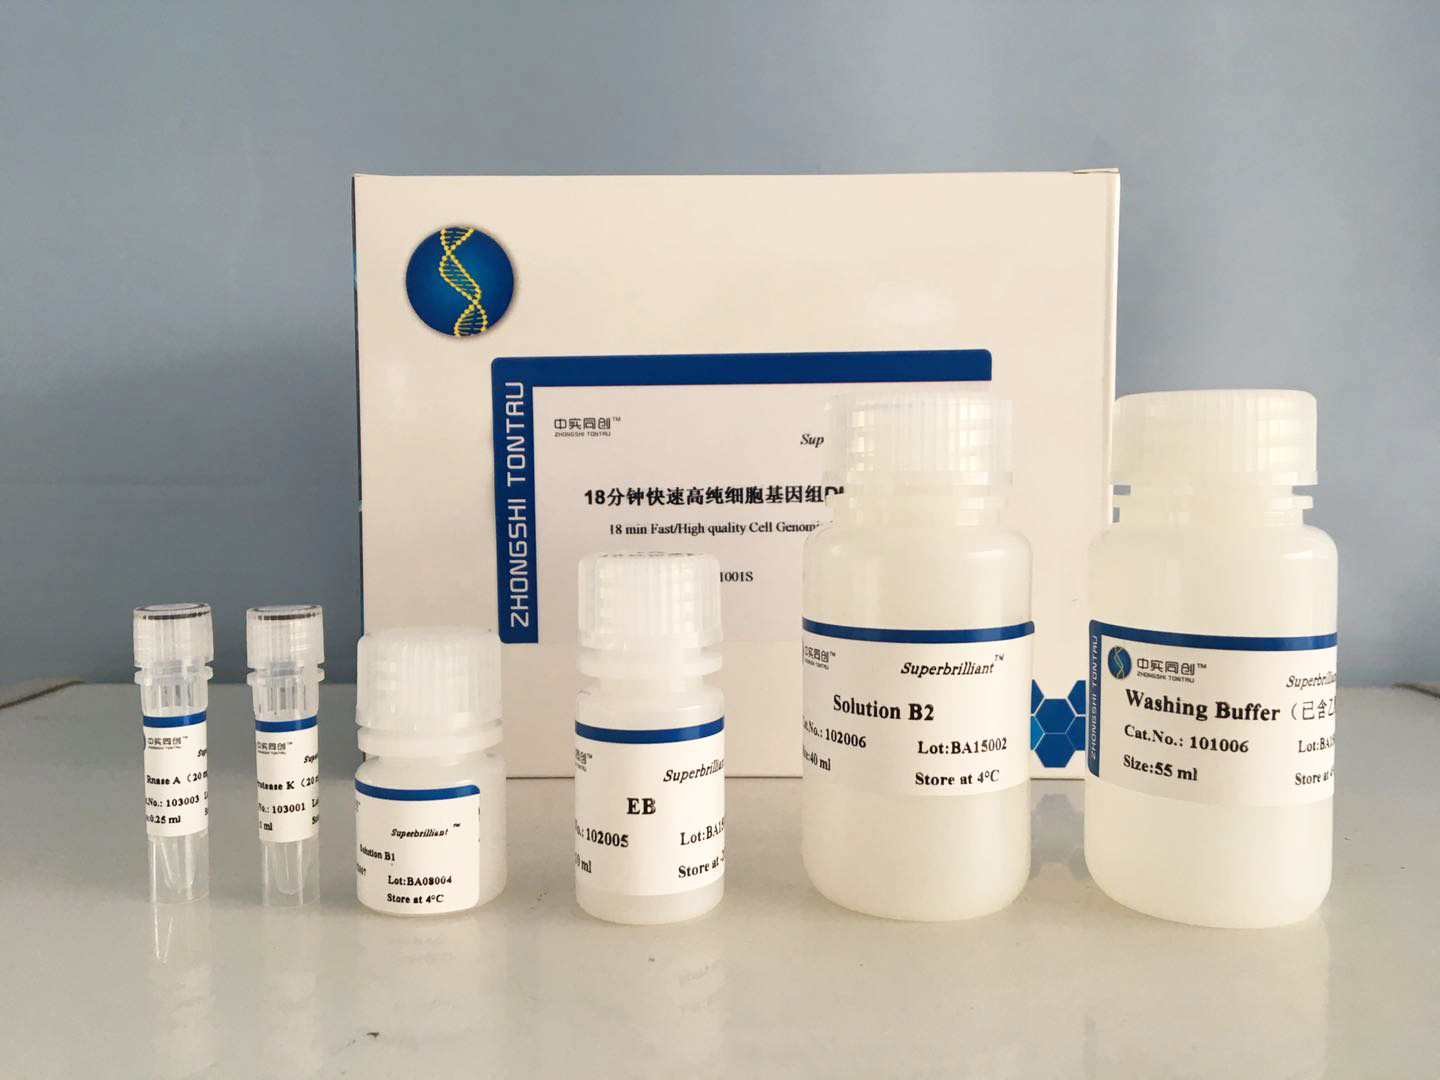 Superbrilliant® 18分钟快速高纯细胞基因组DNA提取试剂盒 (ZS-M11001)